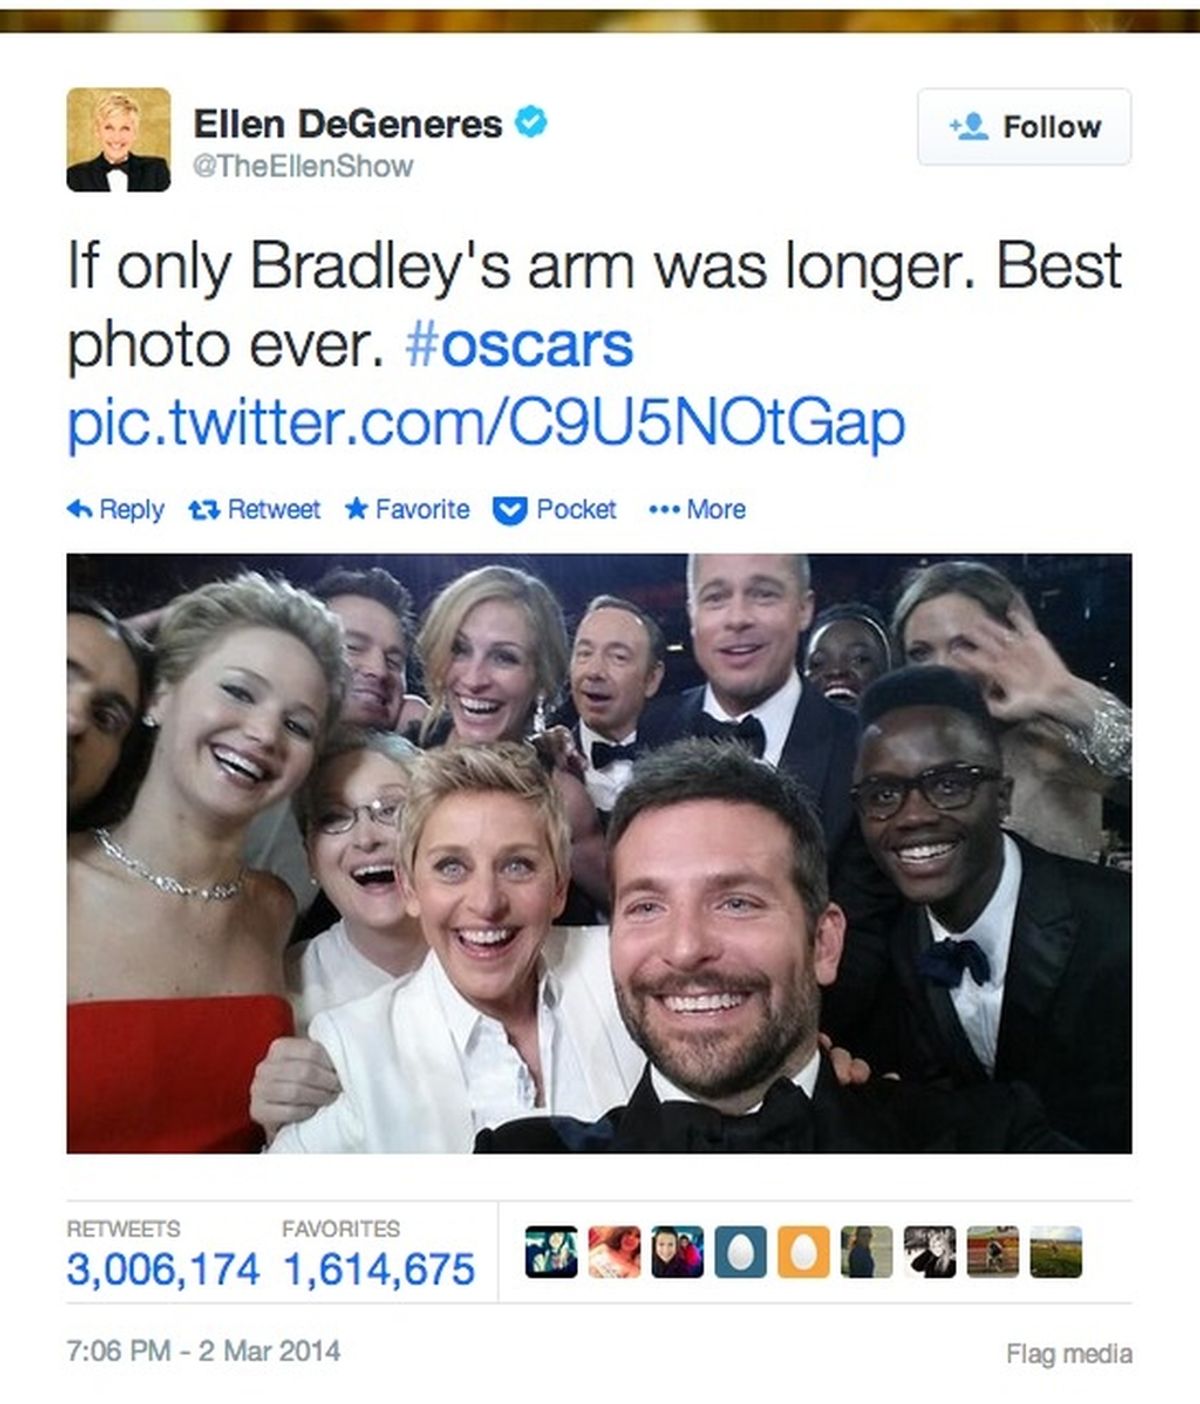 El selfie de los tres millones de retuits